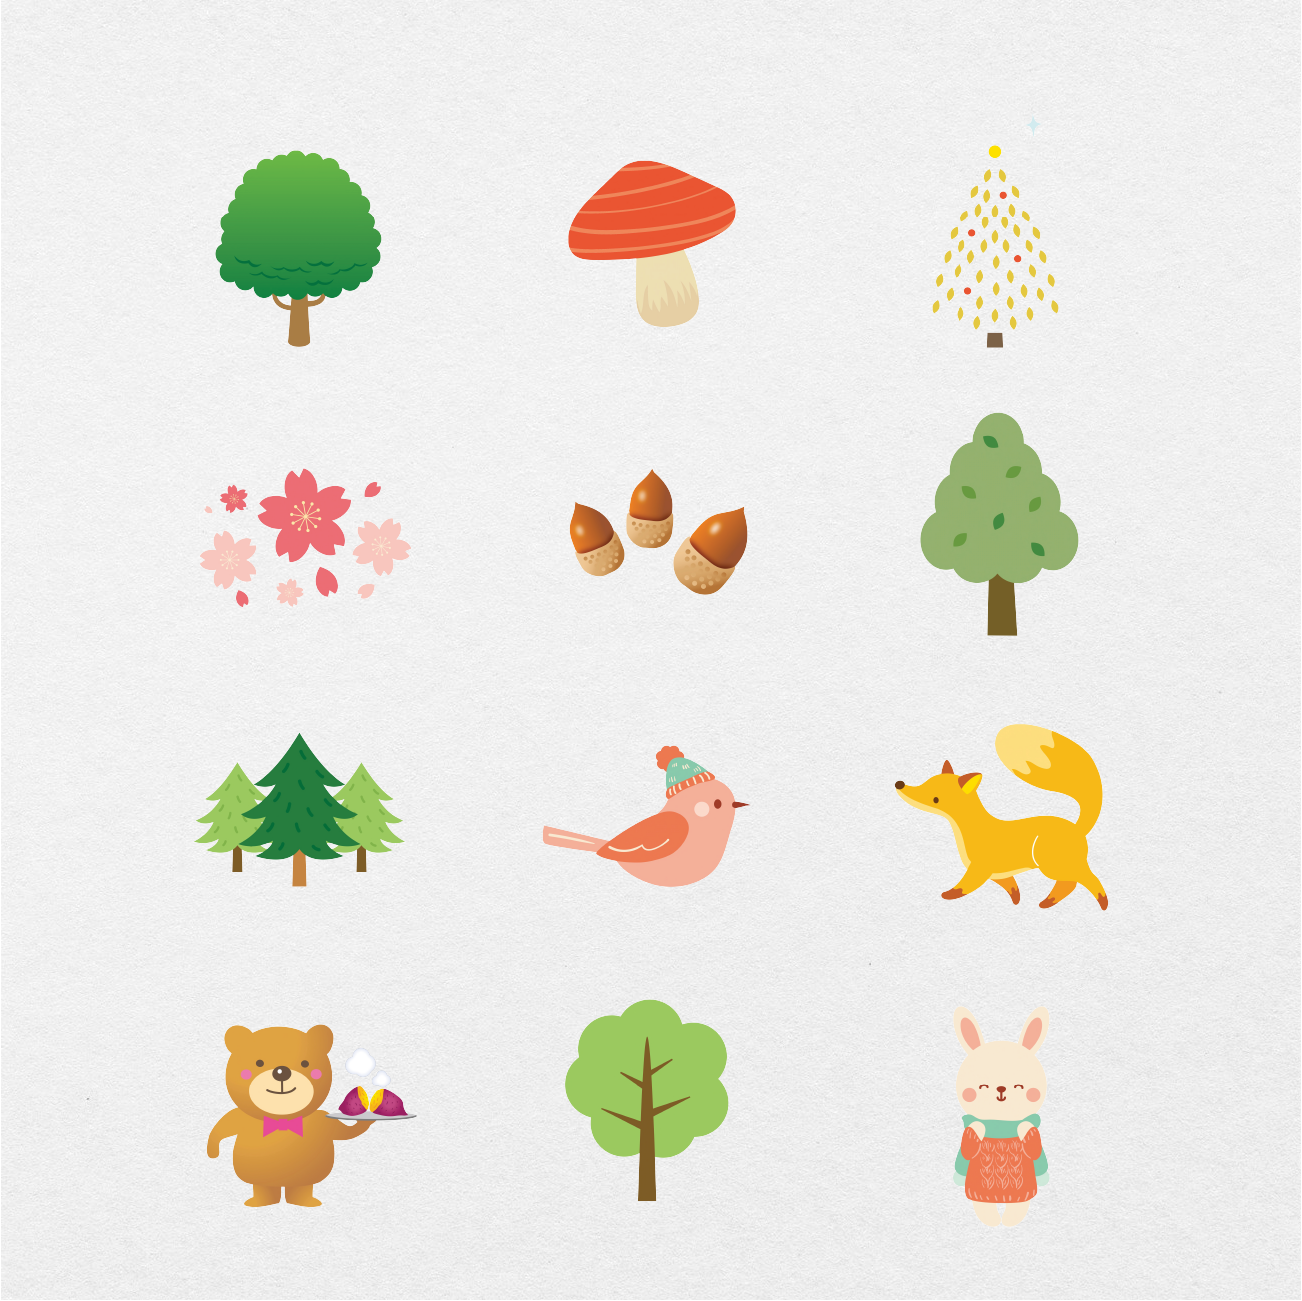 78 Digital Forest Elements Sticker Bundle - Stationery Pal